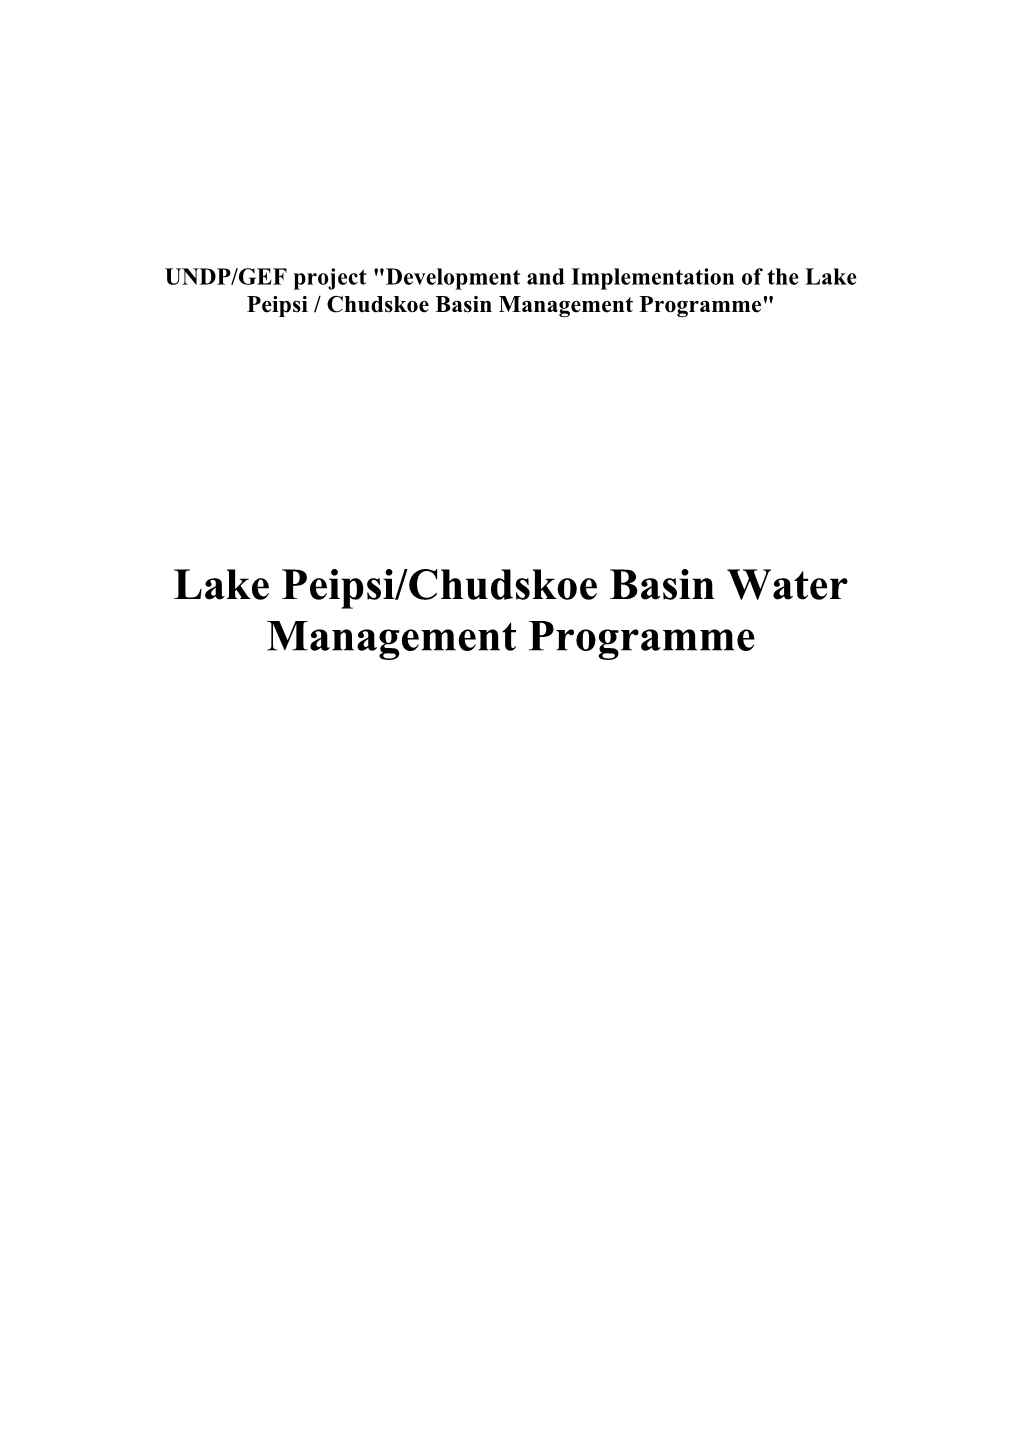 Lake Peipsi/Chudskoe Basin Water Management Programme